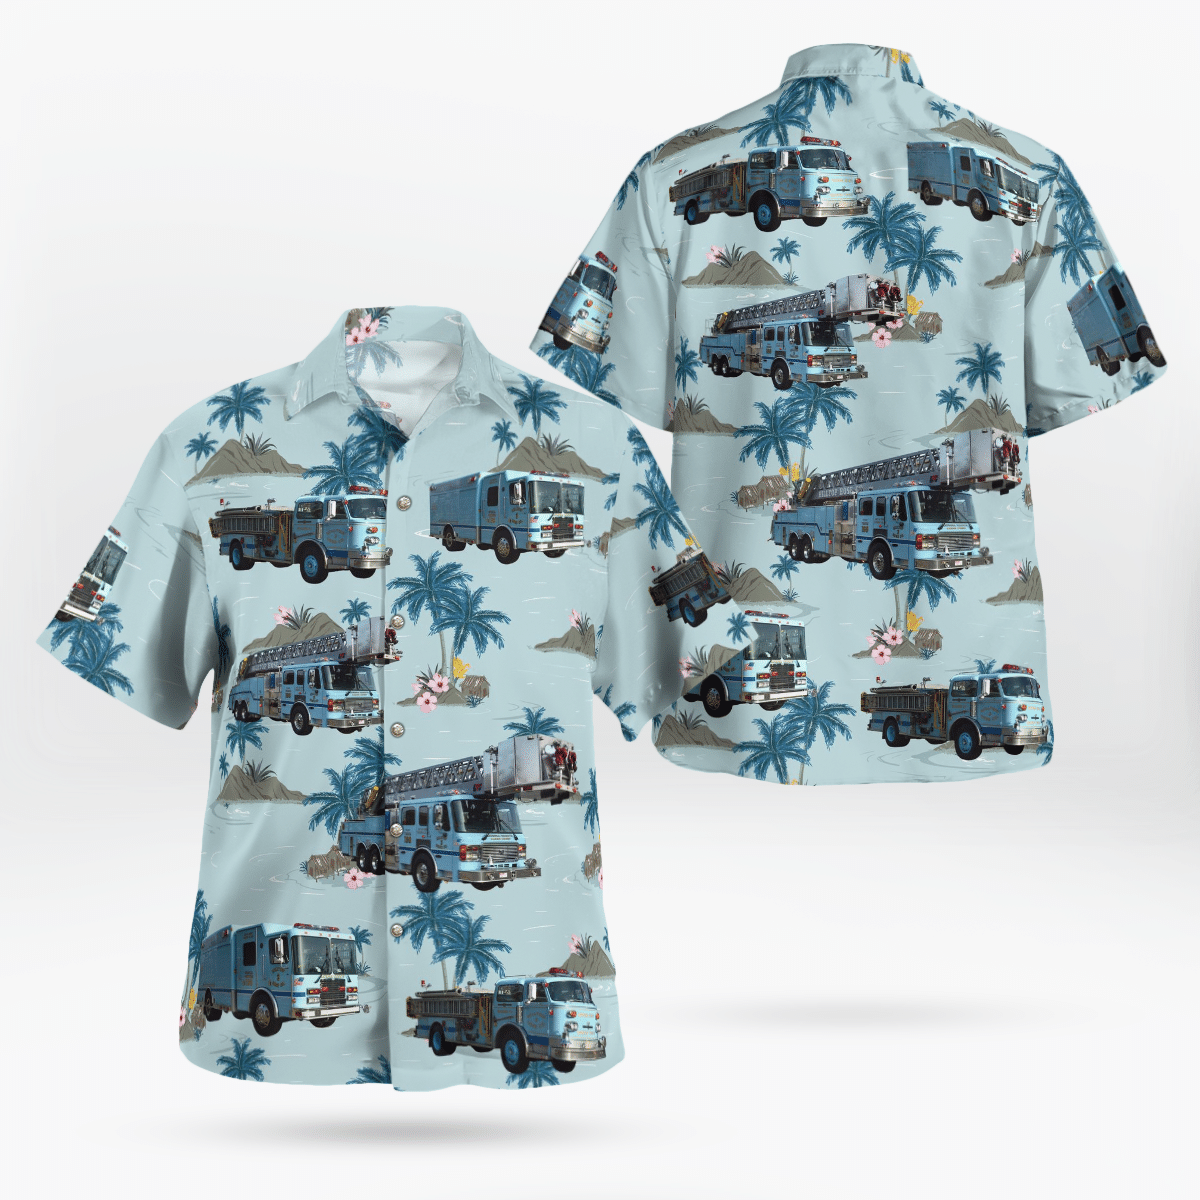 Listed below are some High-quality Aloha Shirt 65